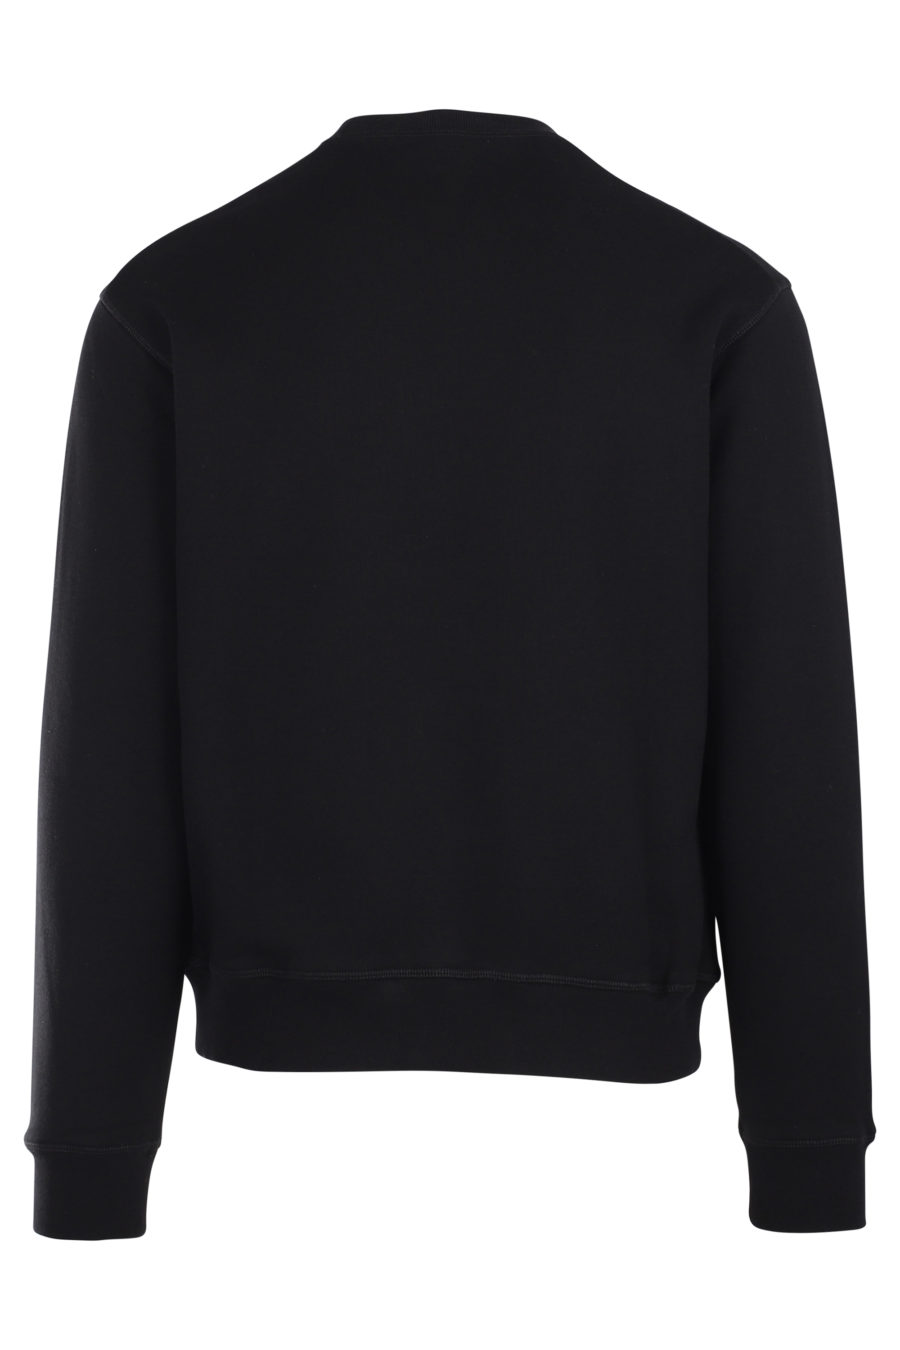 Schwarzes Sweatshirt mit großem Logo ceresio 9 - IMG 9879